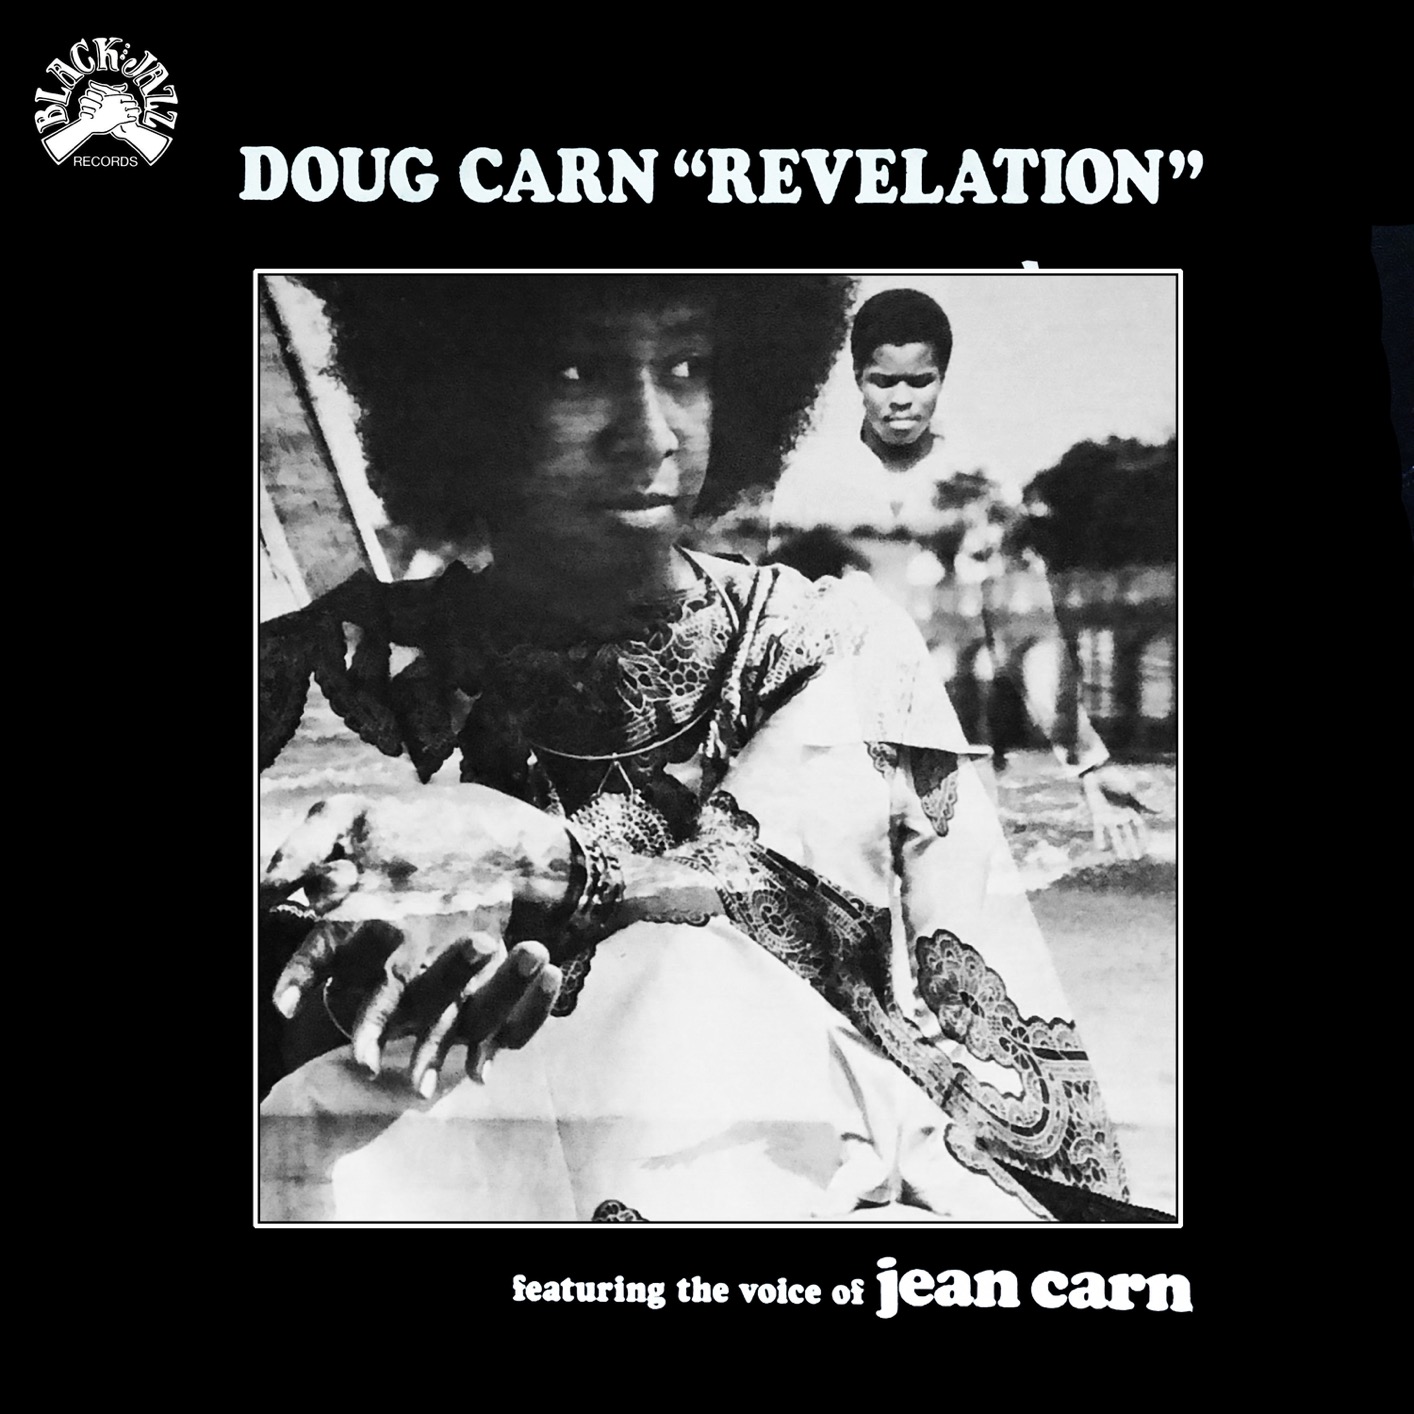 Doug Carn - Revelation (Remastered) (1973/2020) [FLAC 24bit/96kHz]